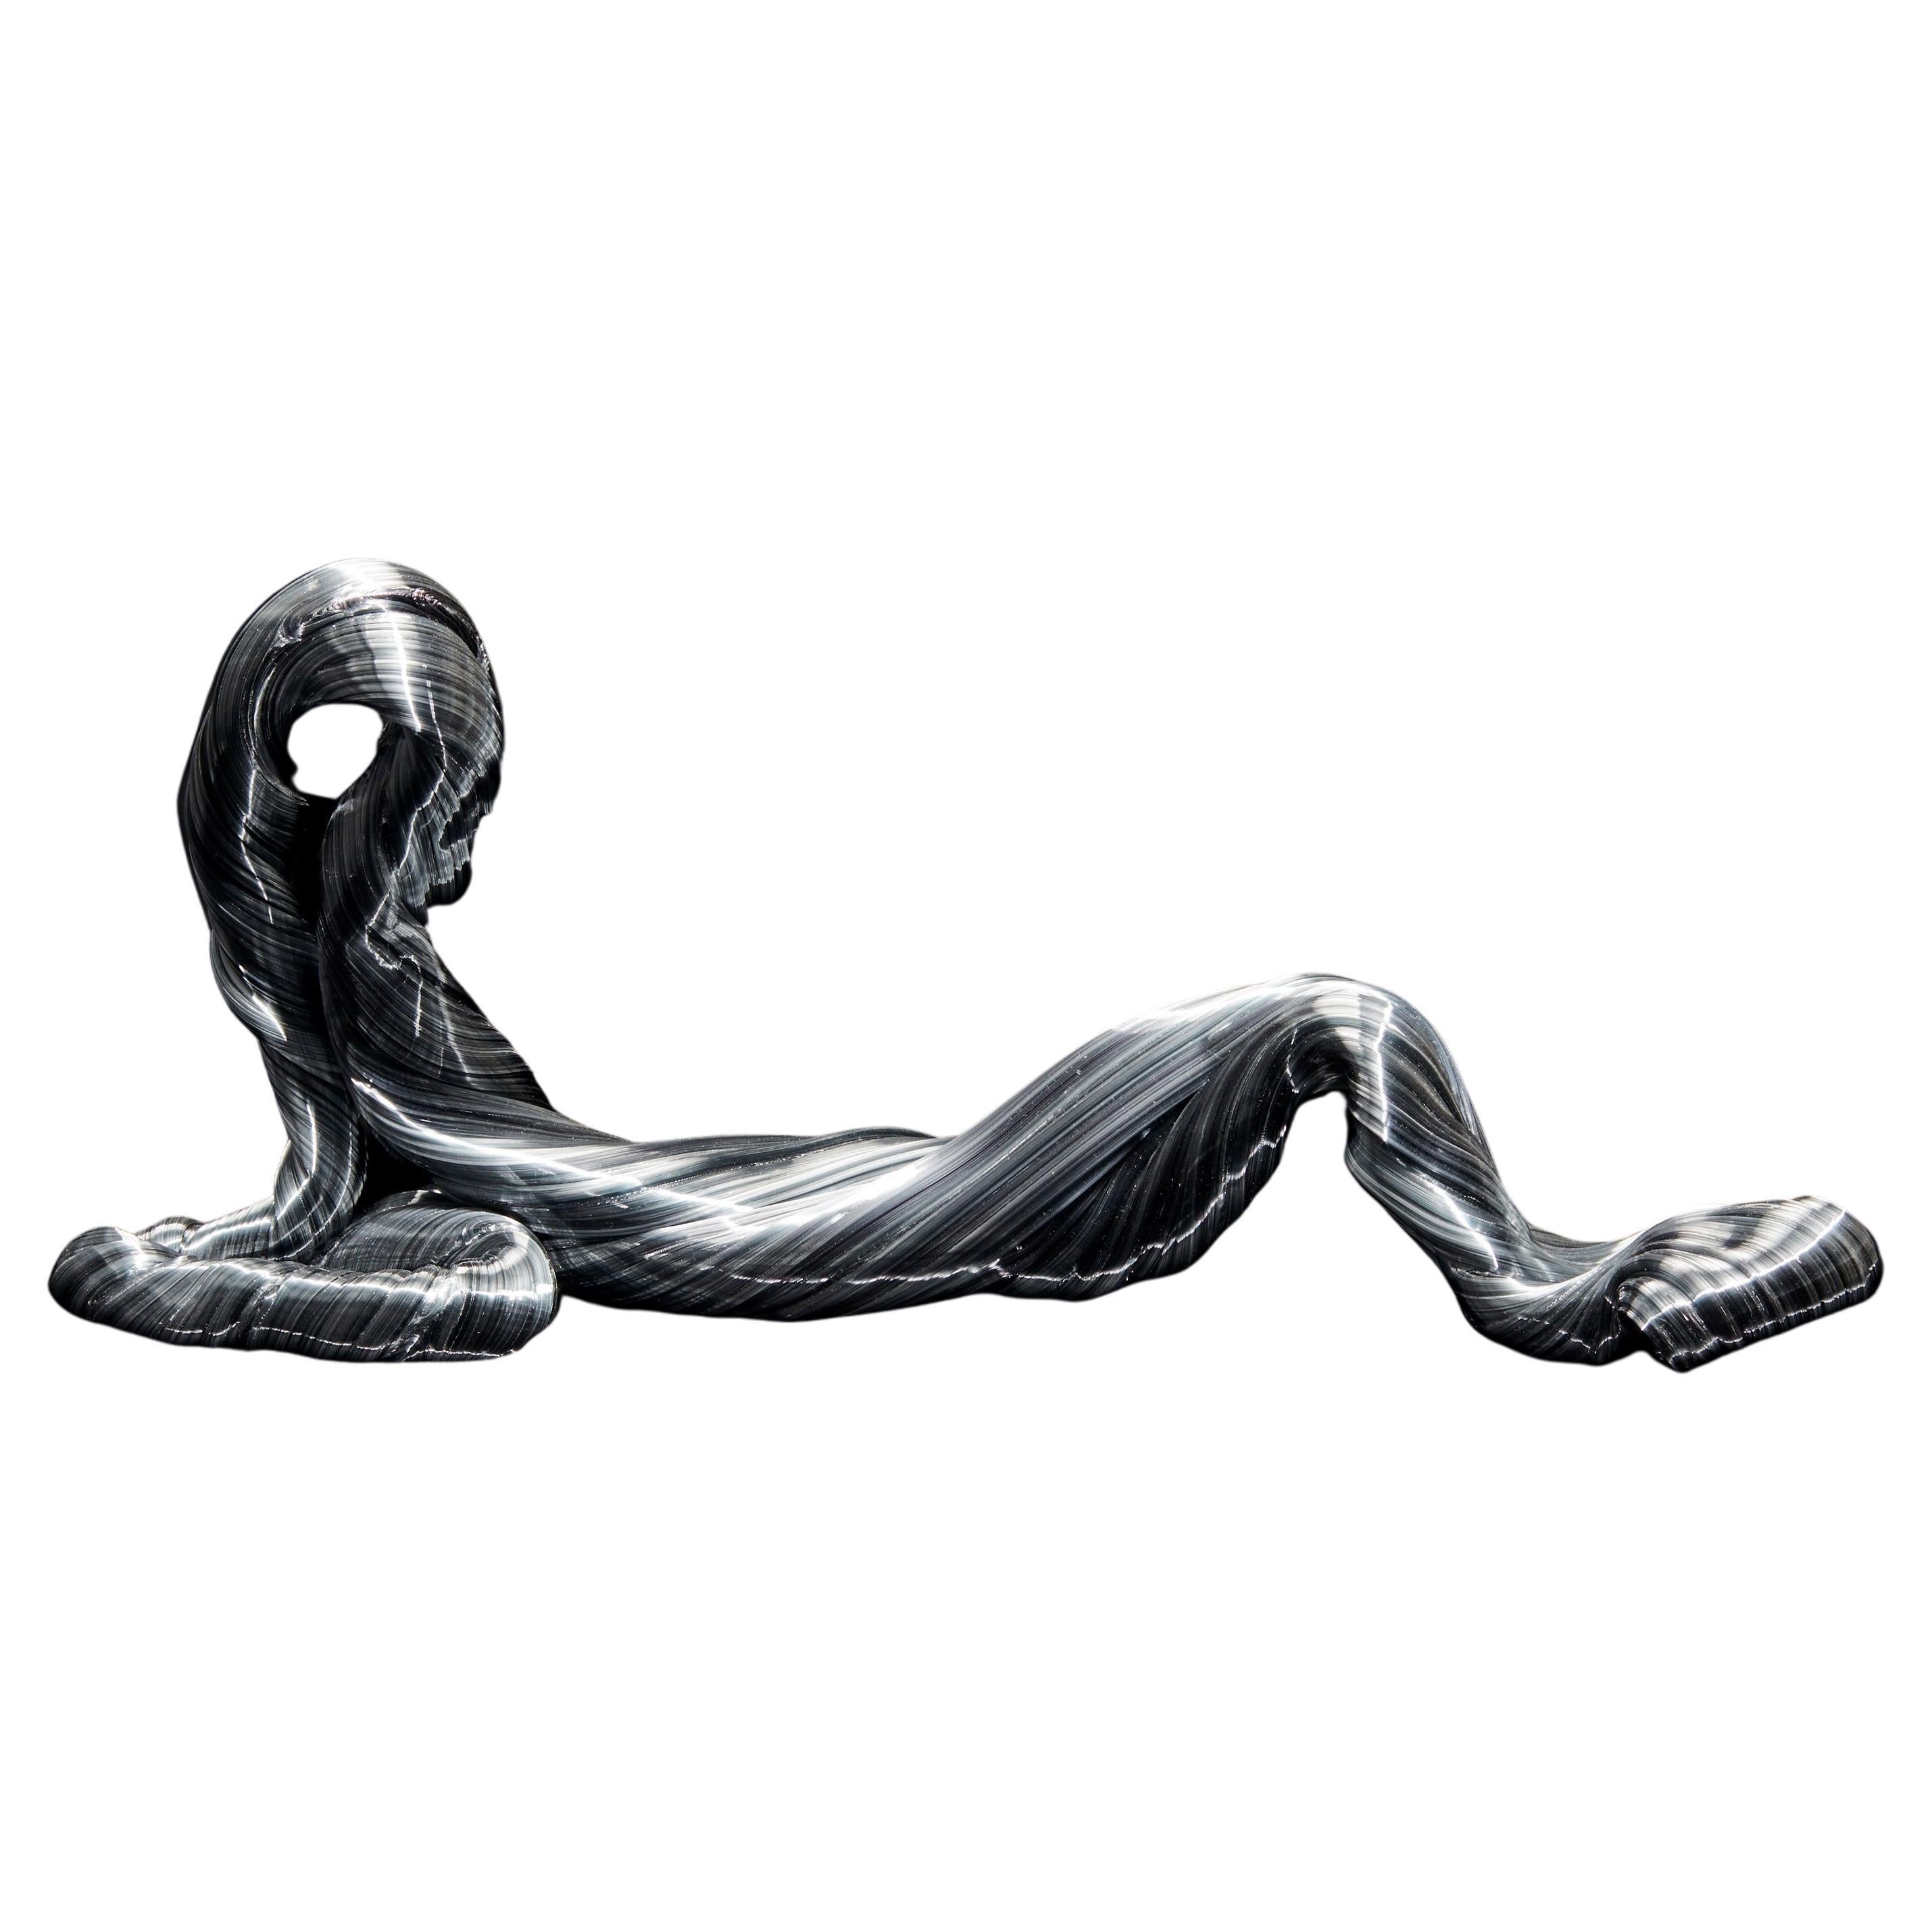 Nonlinear in Black, une sculpture en verre abstrait unique de Maria Bang Espersen